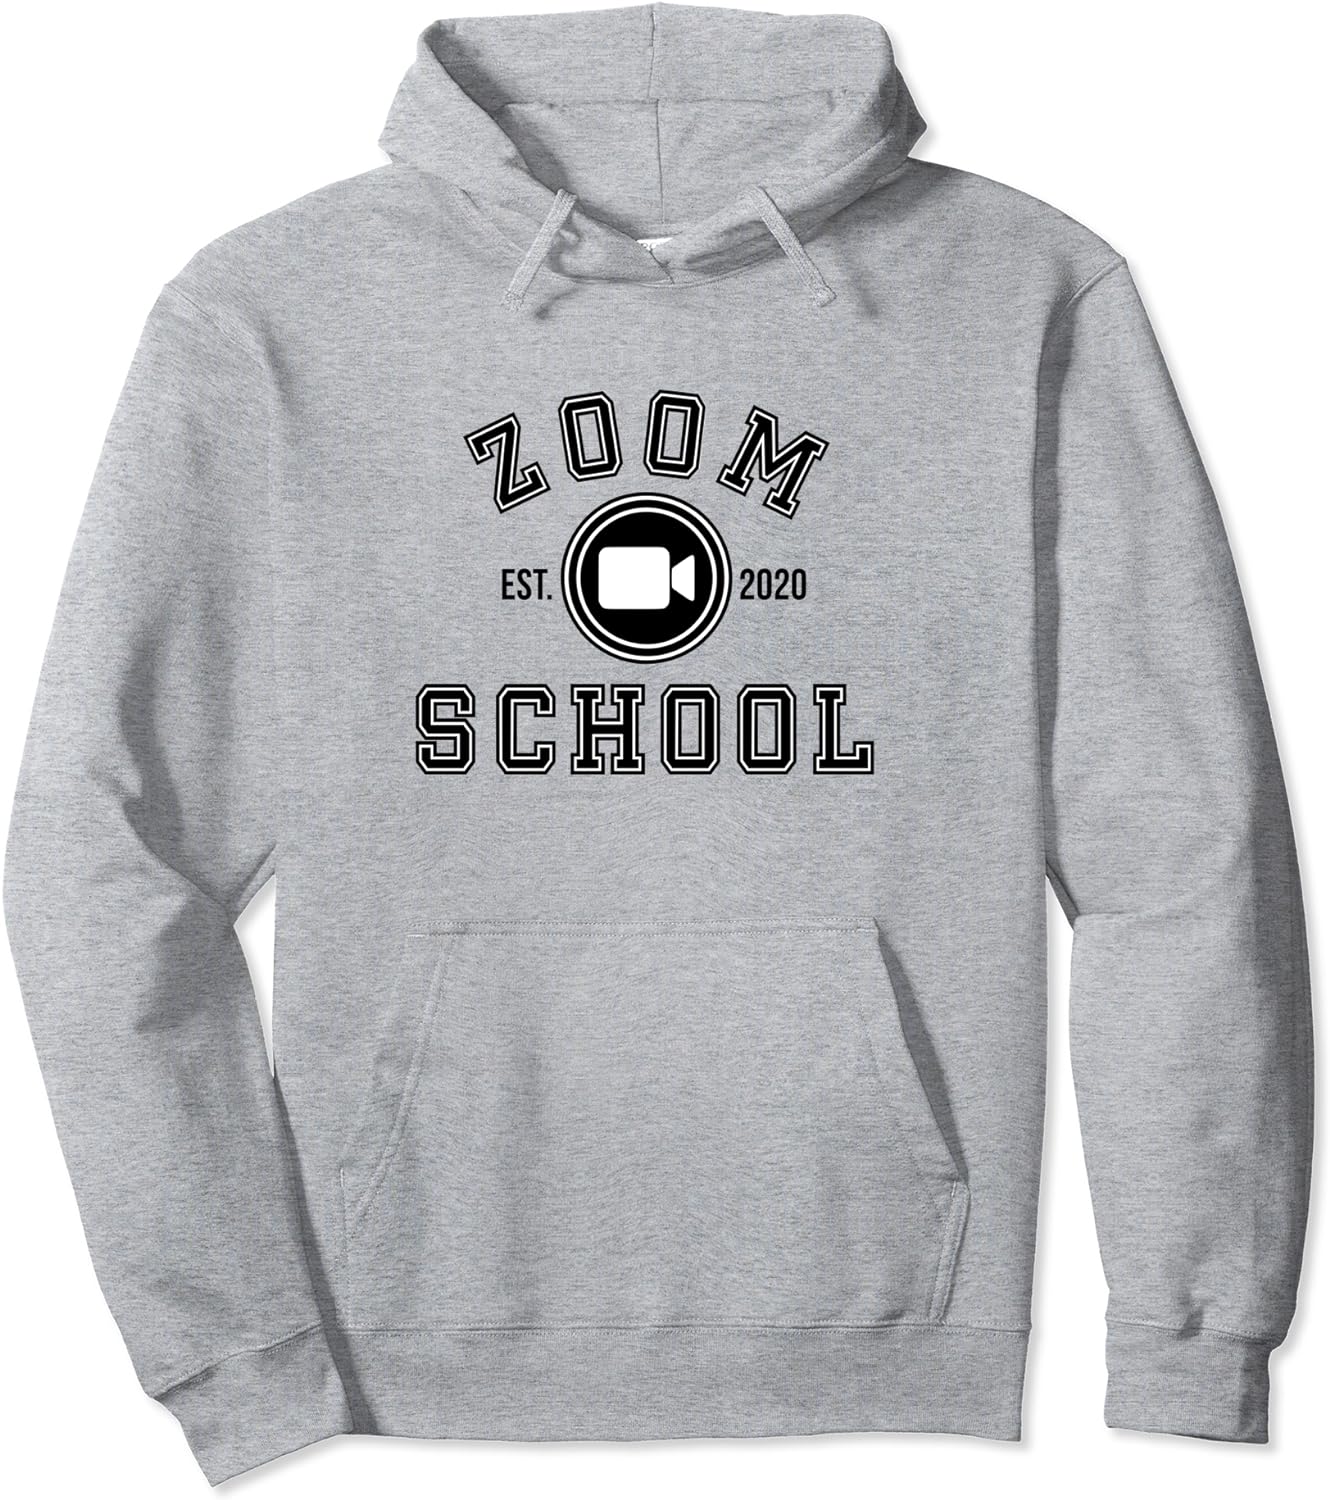 Zoom School Est 2020  Back to School 2020  Virtual School Pullover Hoodie